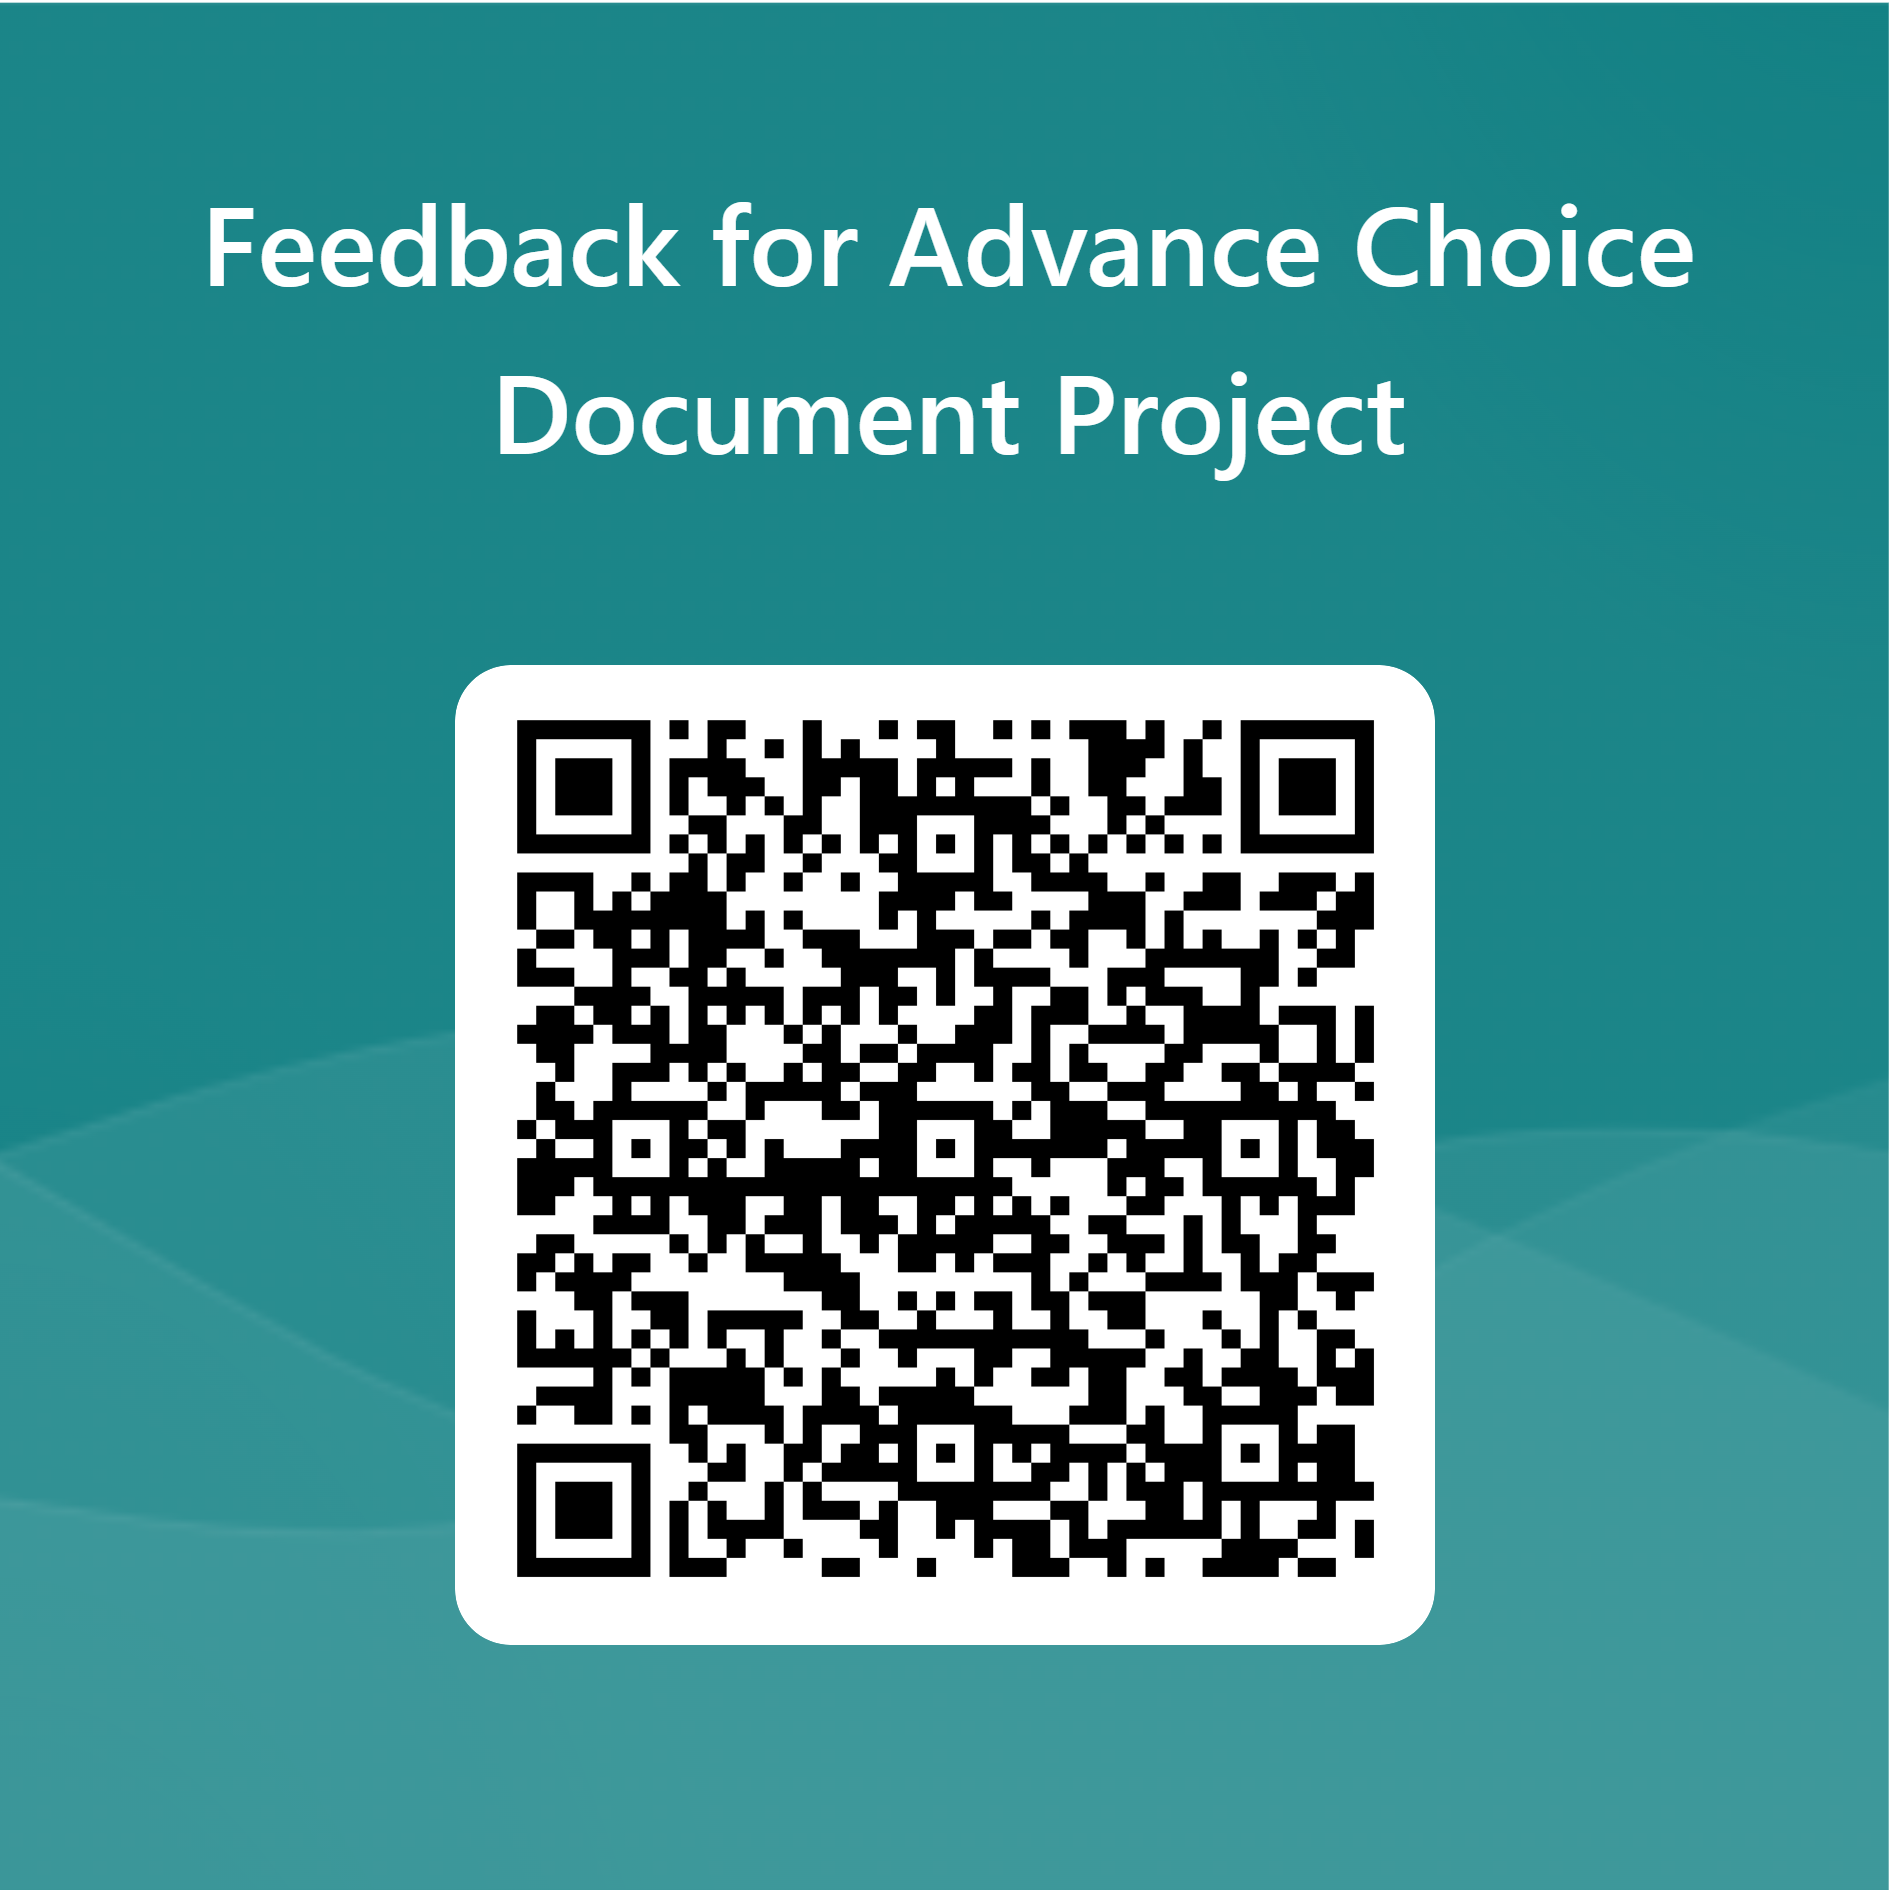 QR code for feedback form